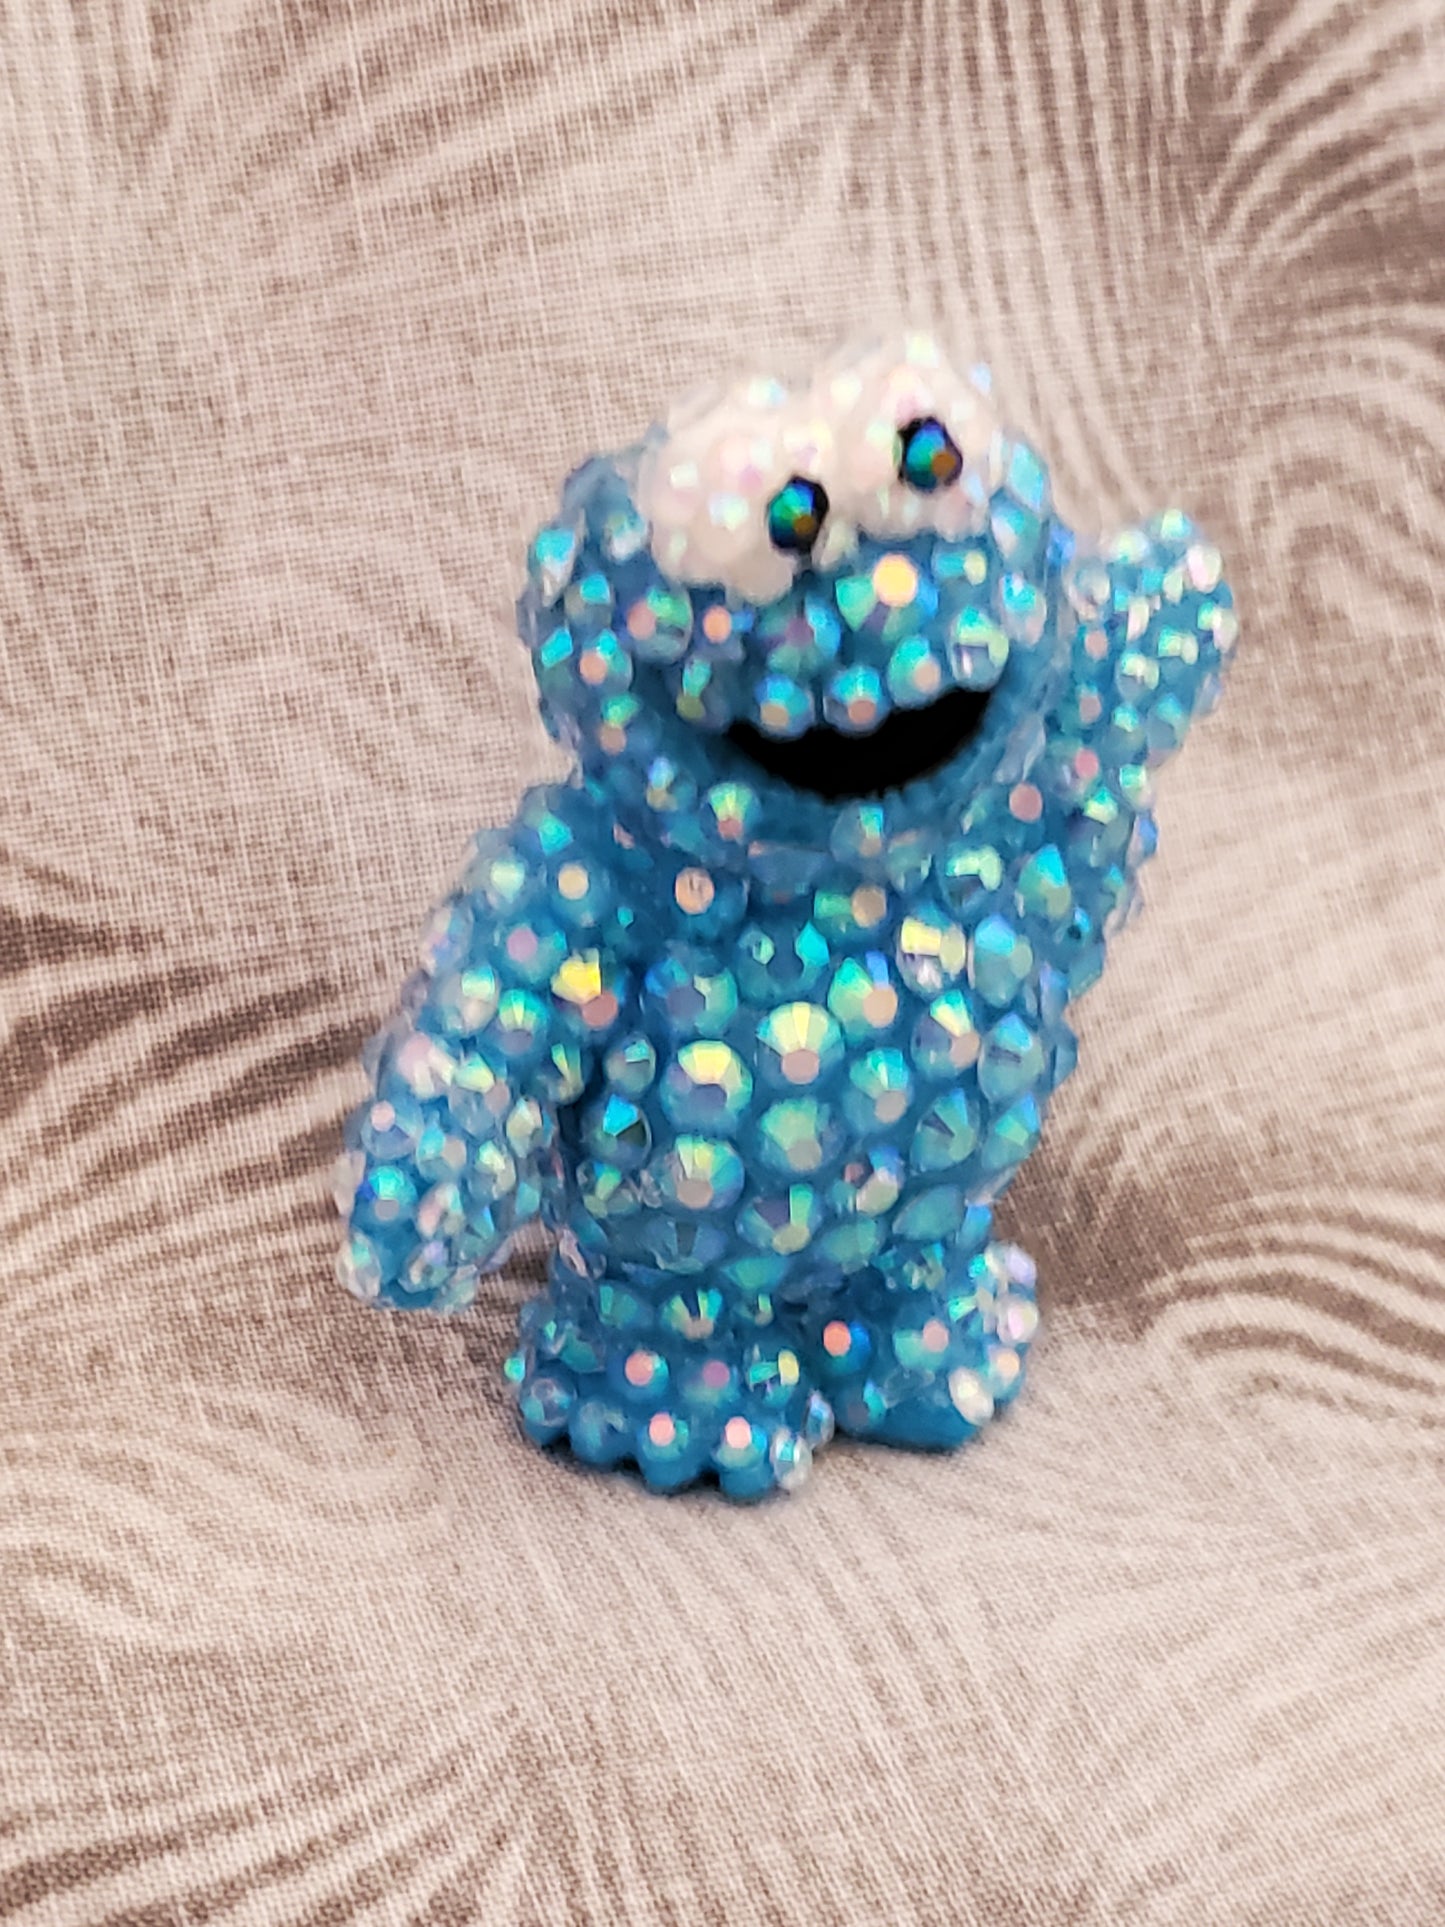 Sparkly Rhinestone Cookie Monster Decoration